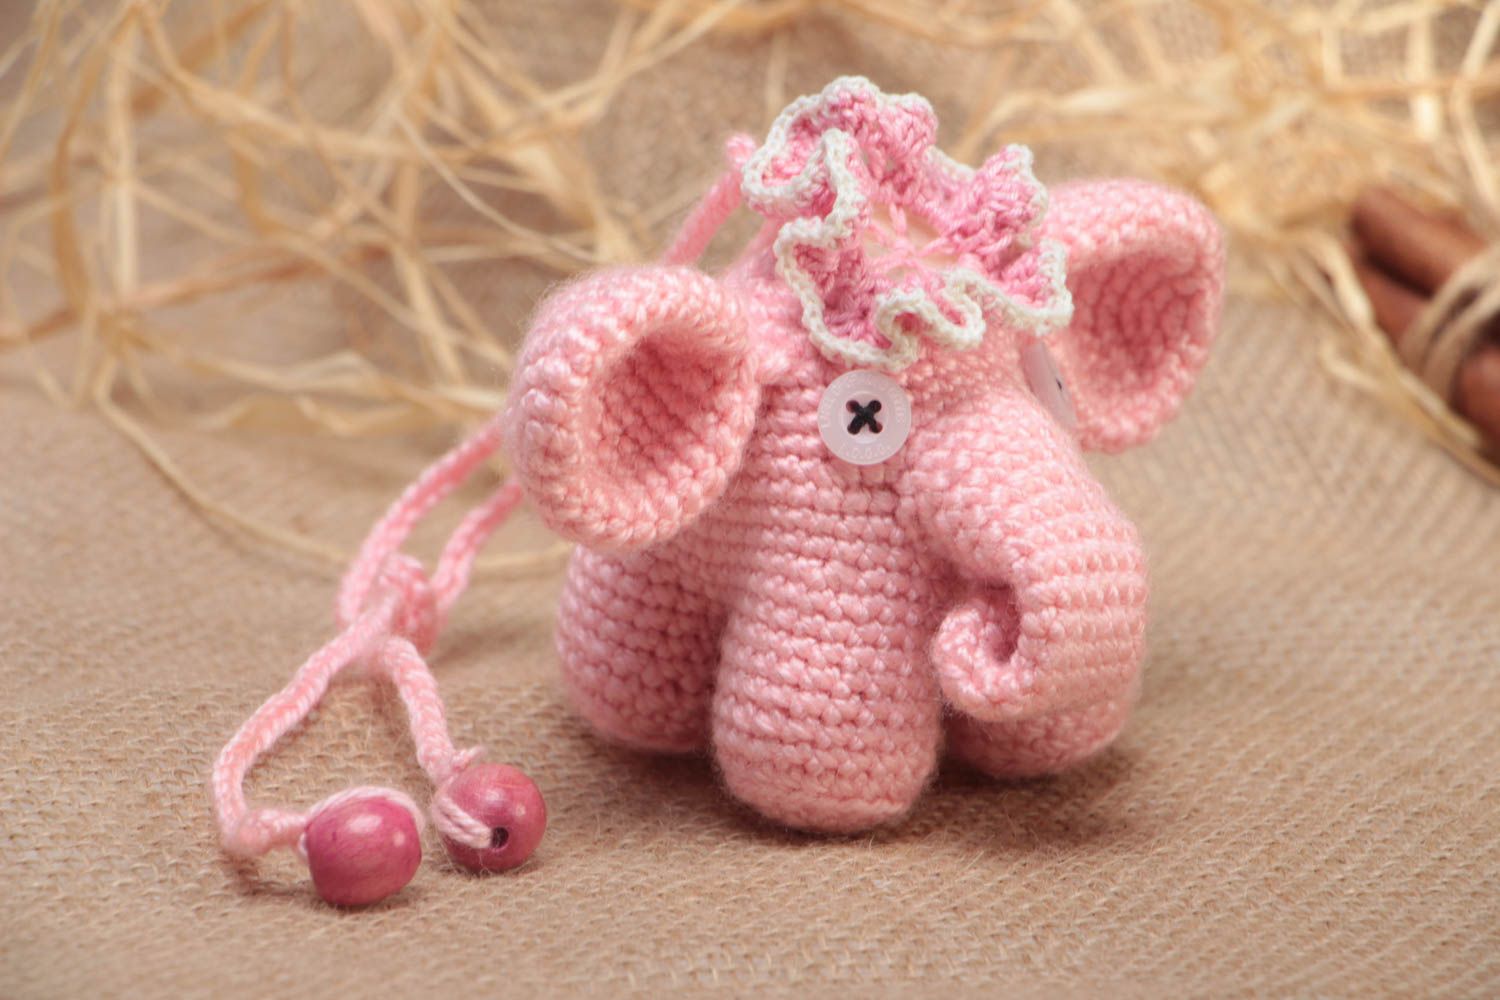 Soft crocheted toy pink elephant made of acrylic threads handmade interior decor photo 1